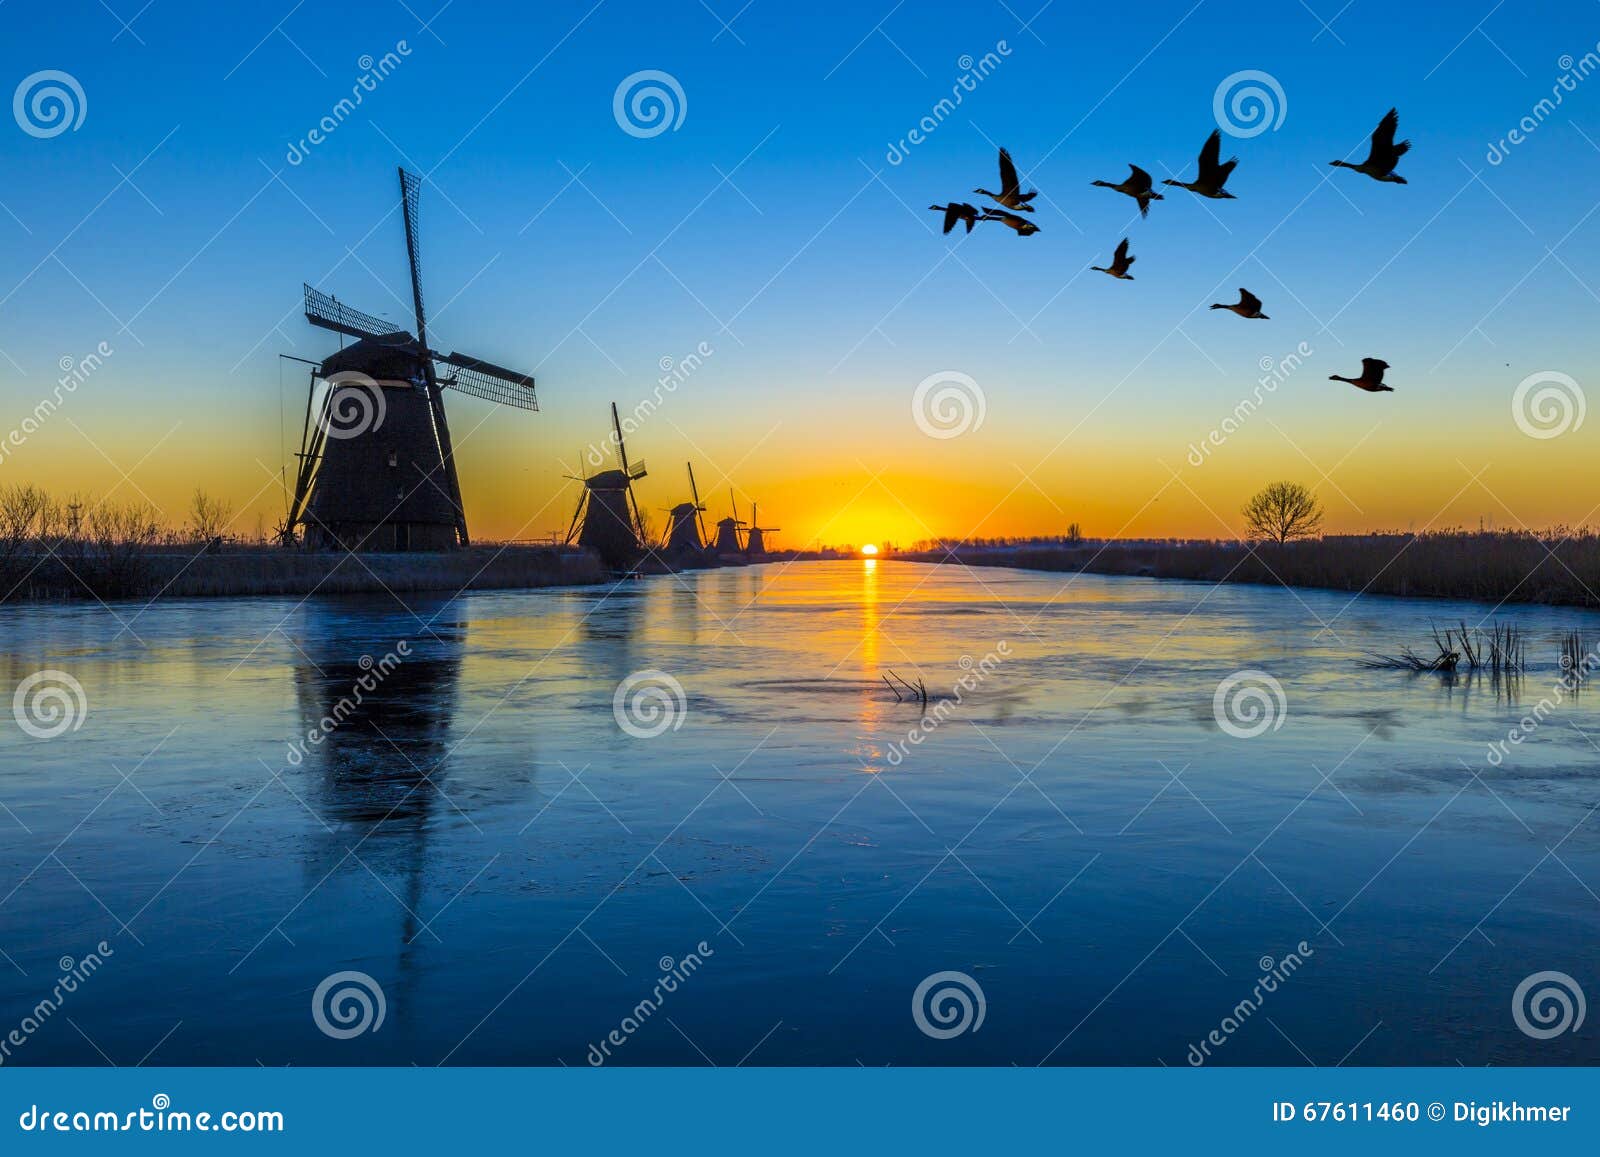 kinderdijk - geese flying over sunrise on the frozen windmills alignment